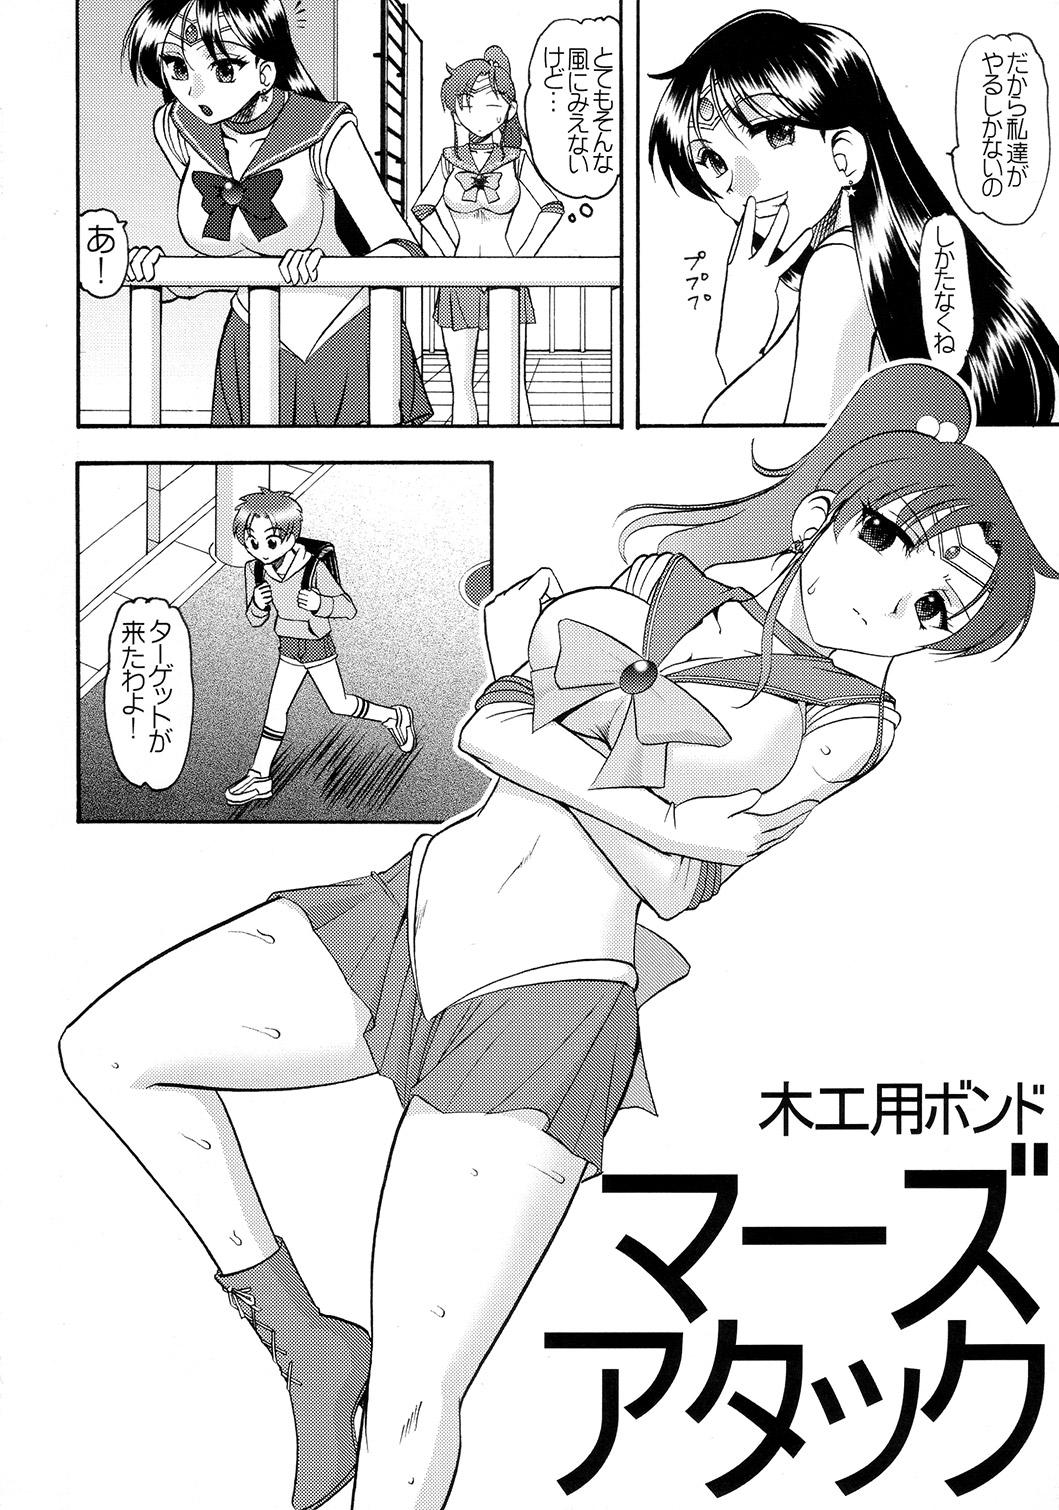 Ssbbw SEMEDAIN G WORKS vol.33 - Wakusei Chokuretsu - Sailor moon Pussyeating - Page 5